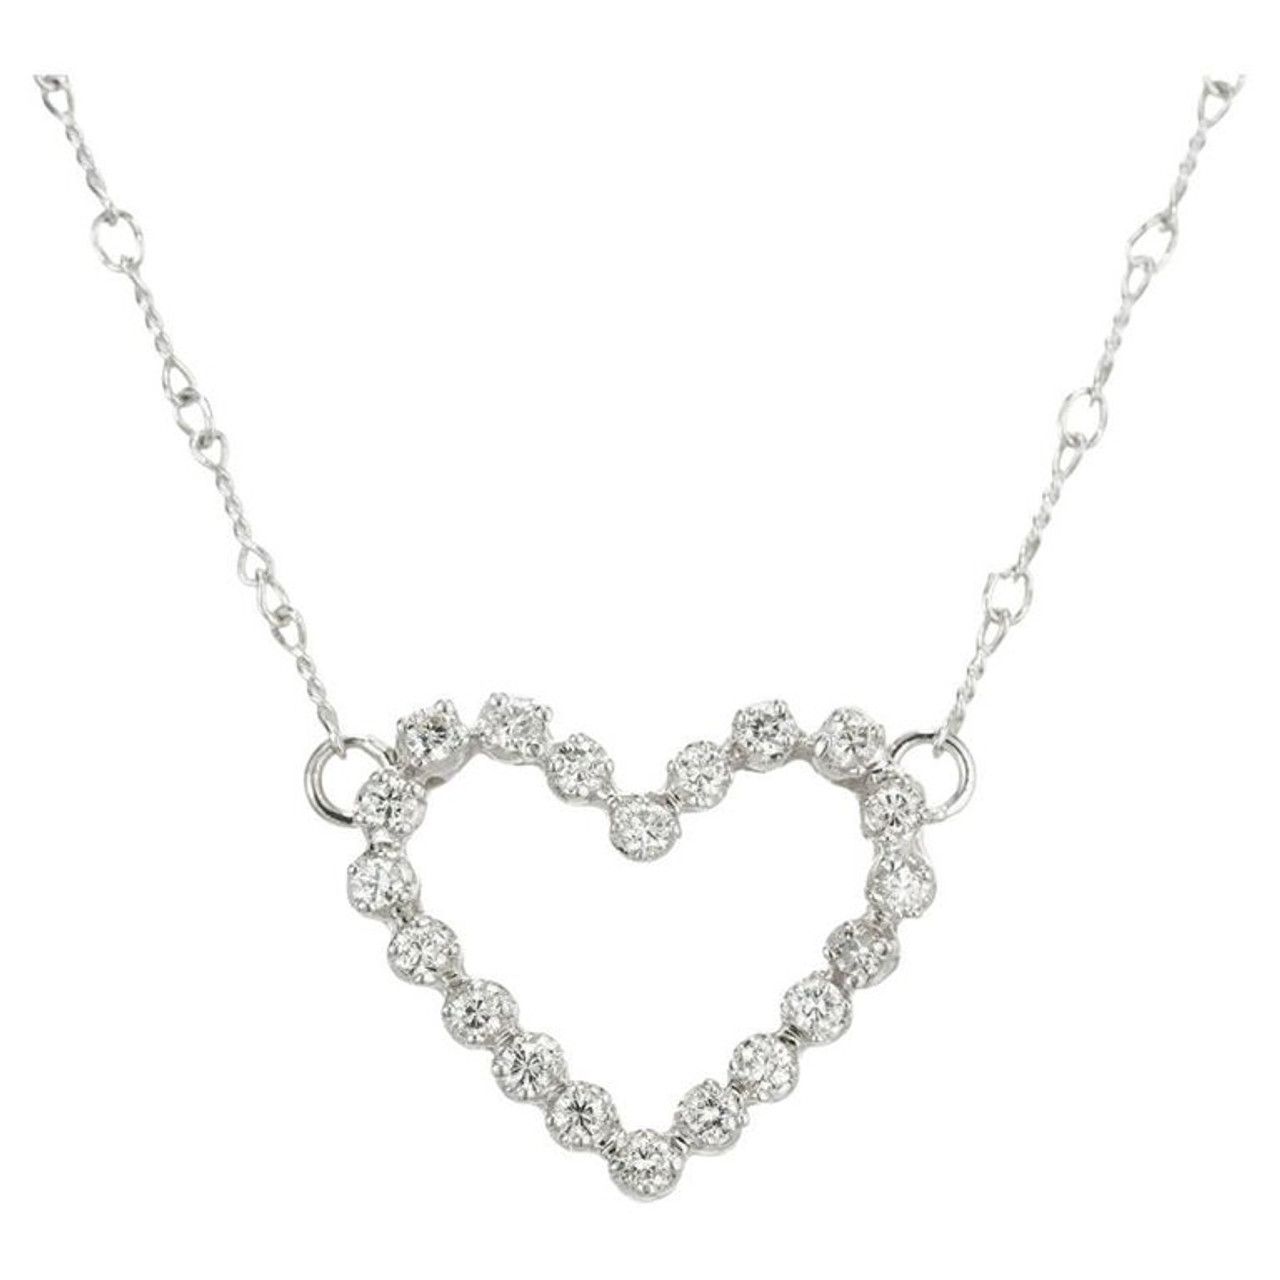 40 Carat Diamond White Gold Pendant Necklace - petersuchyjewelers